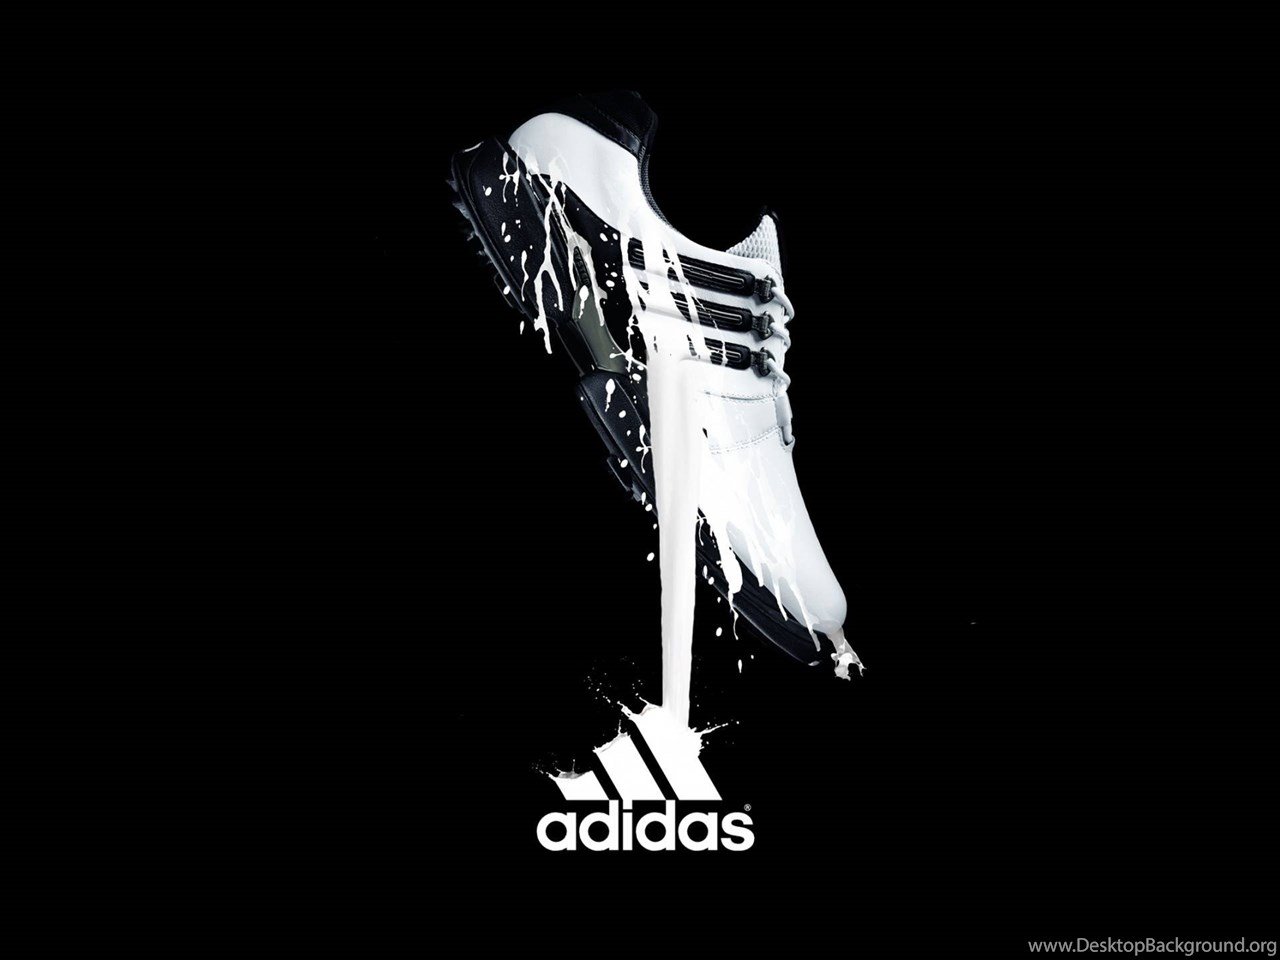 Adidas Shoes Adidas Wallpaper Desktop Background